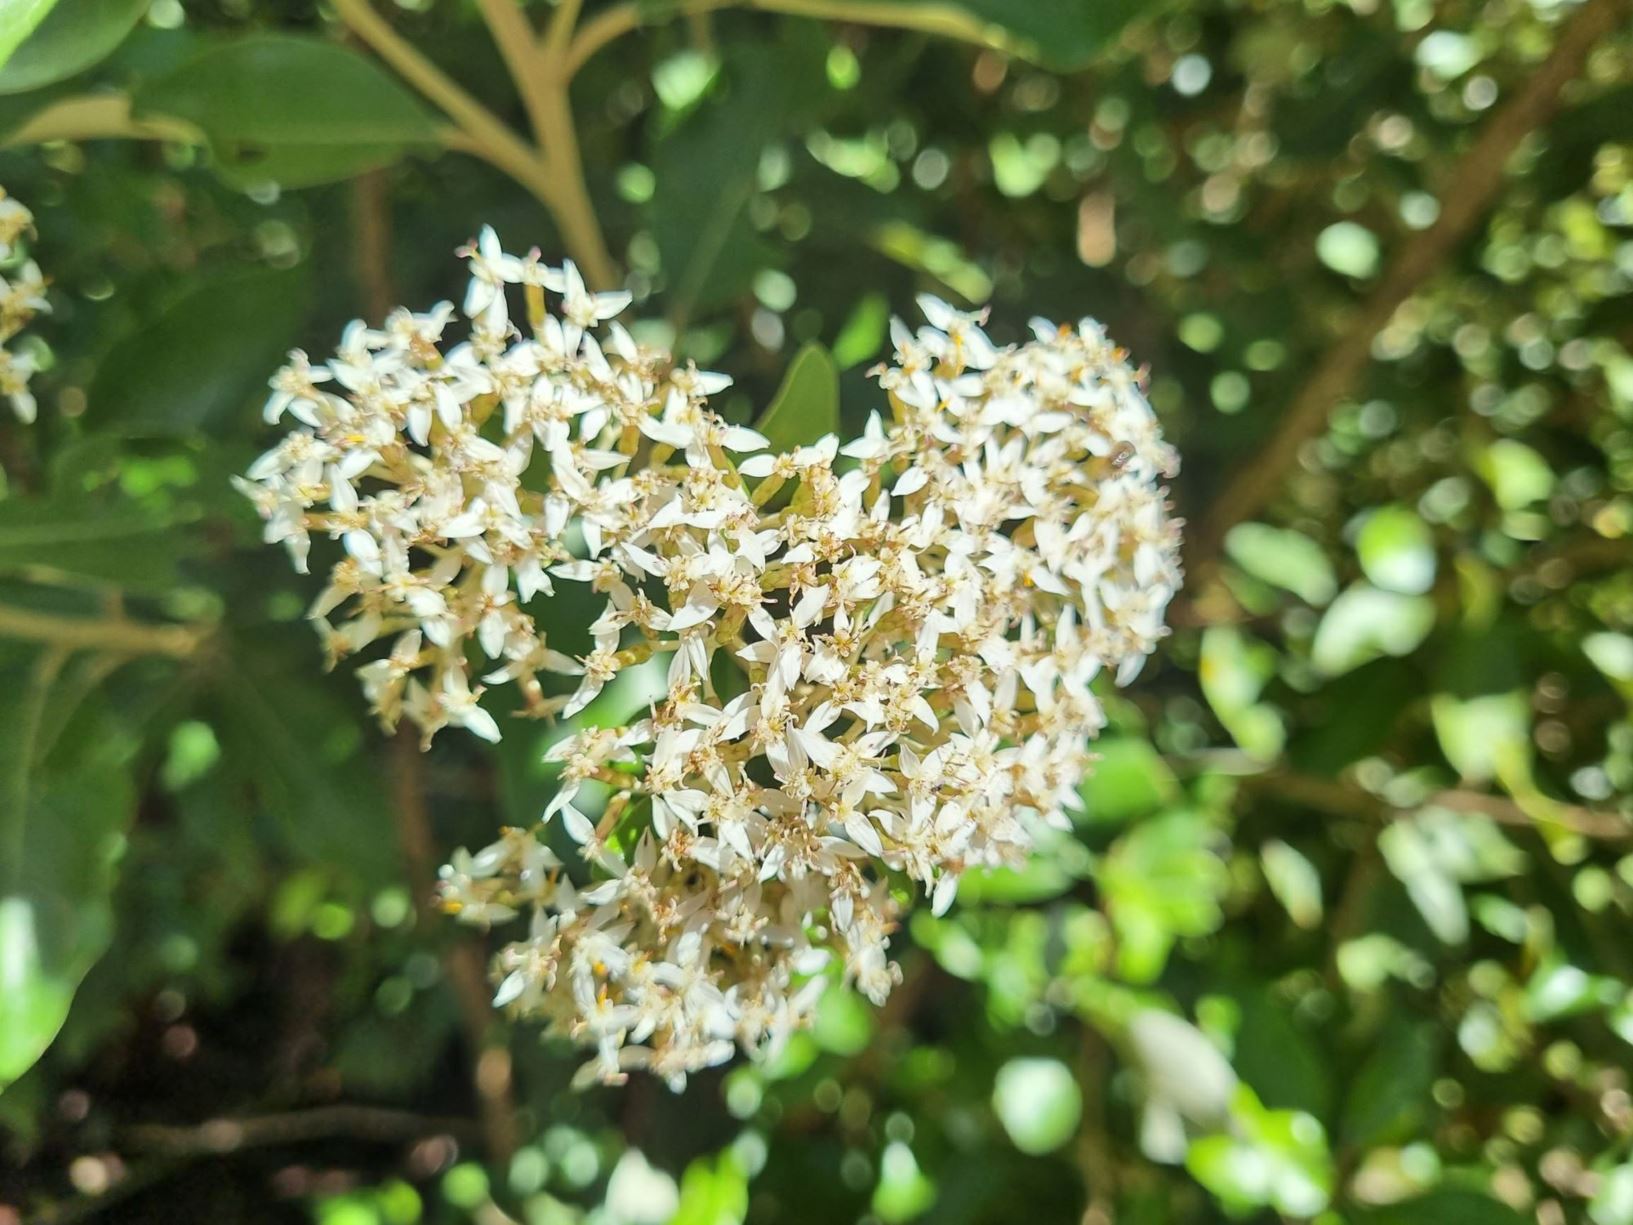 Olearia avicenniifolia - akeake